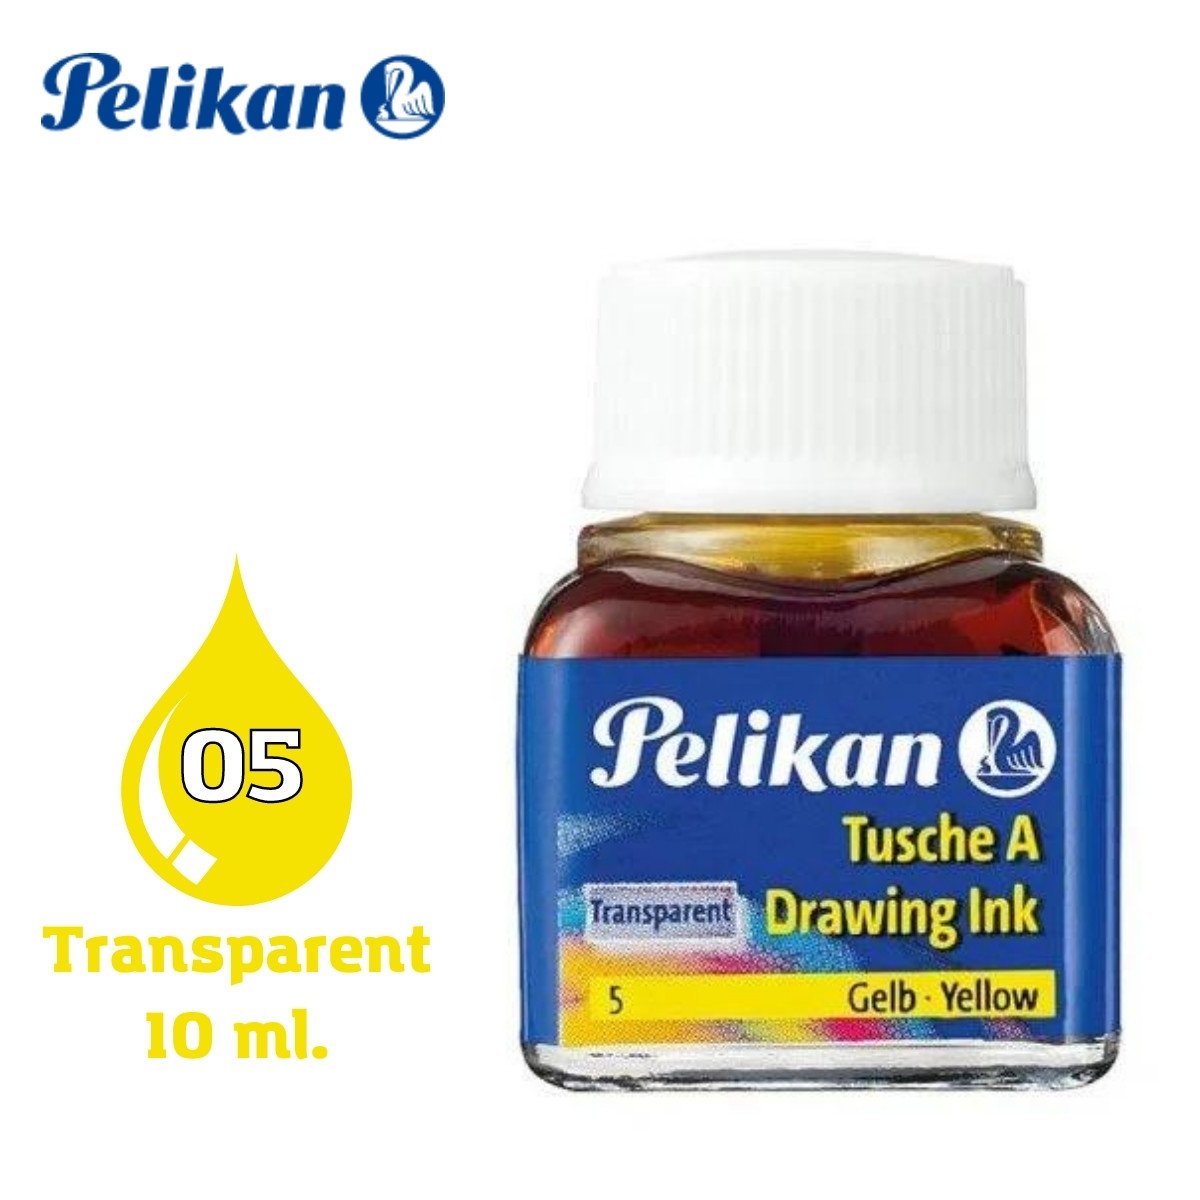 Pelikan 523 Drawing Ink Çini Çizim Mürekkebi 10ml Transparent No 05 Yellow